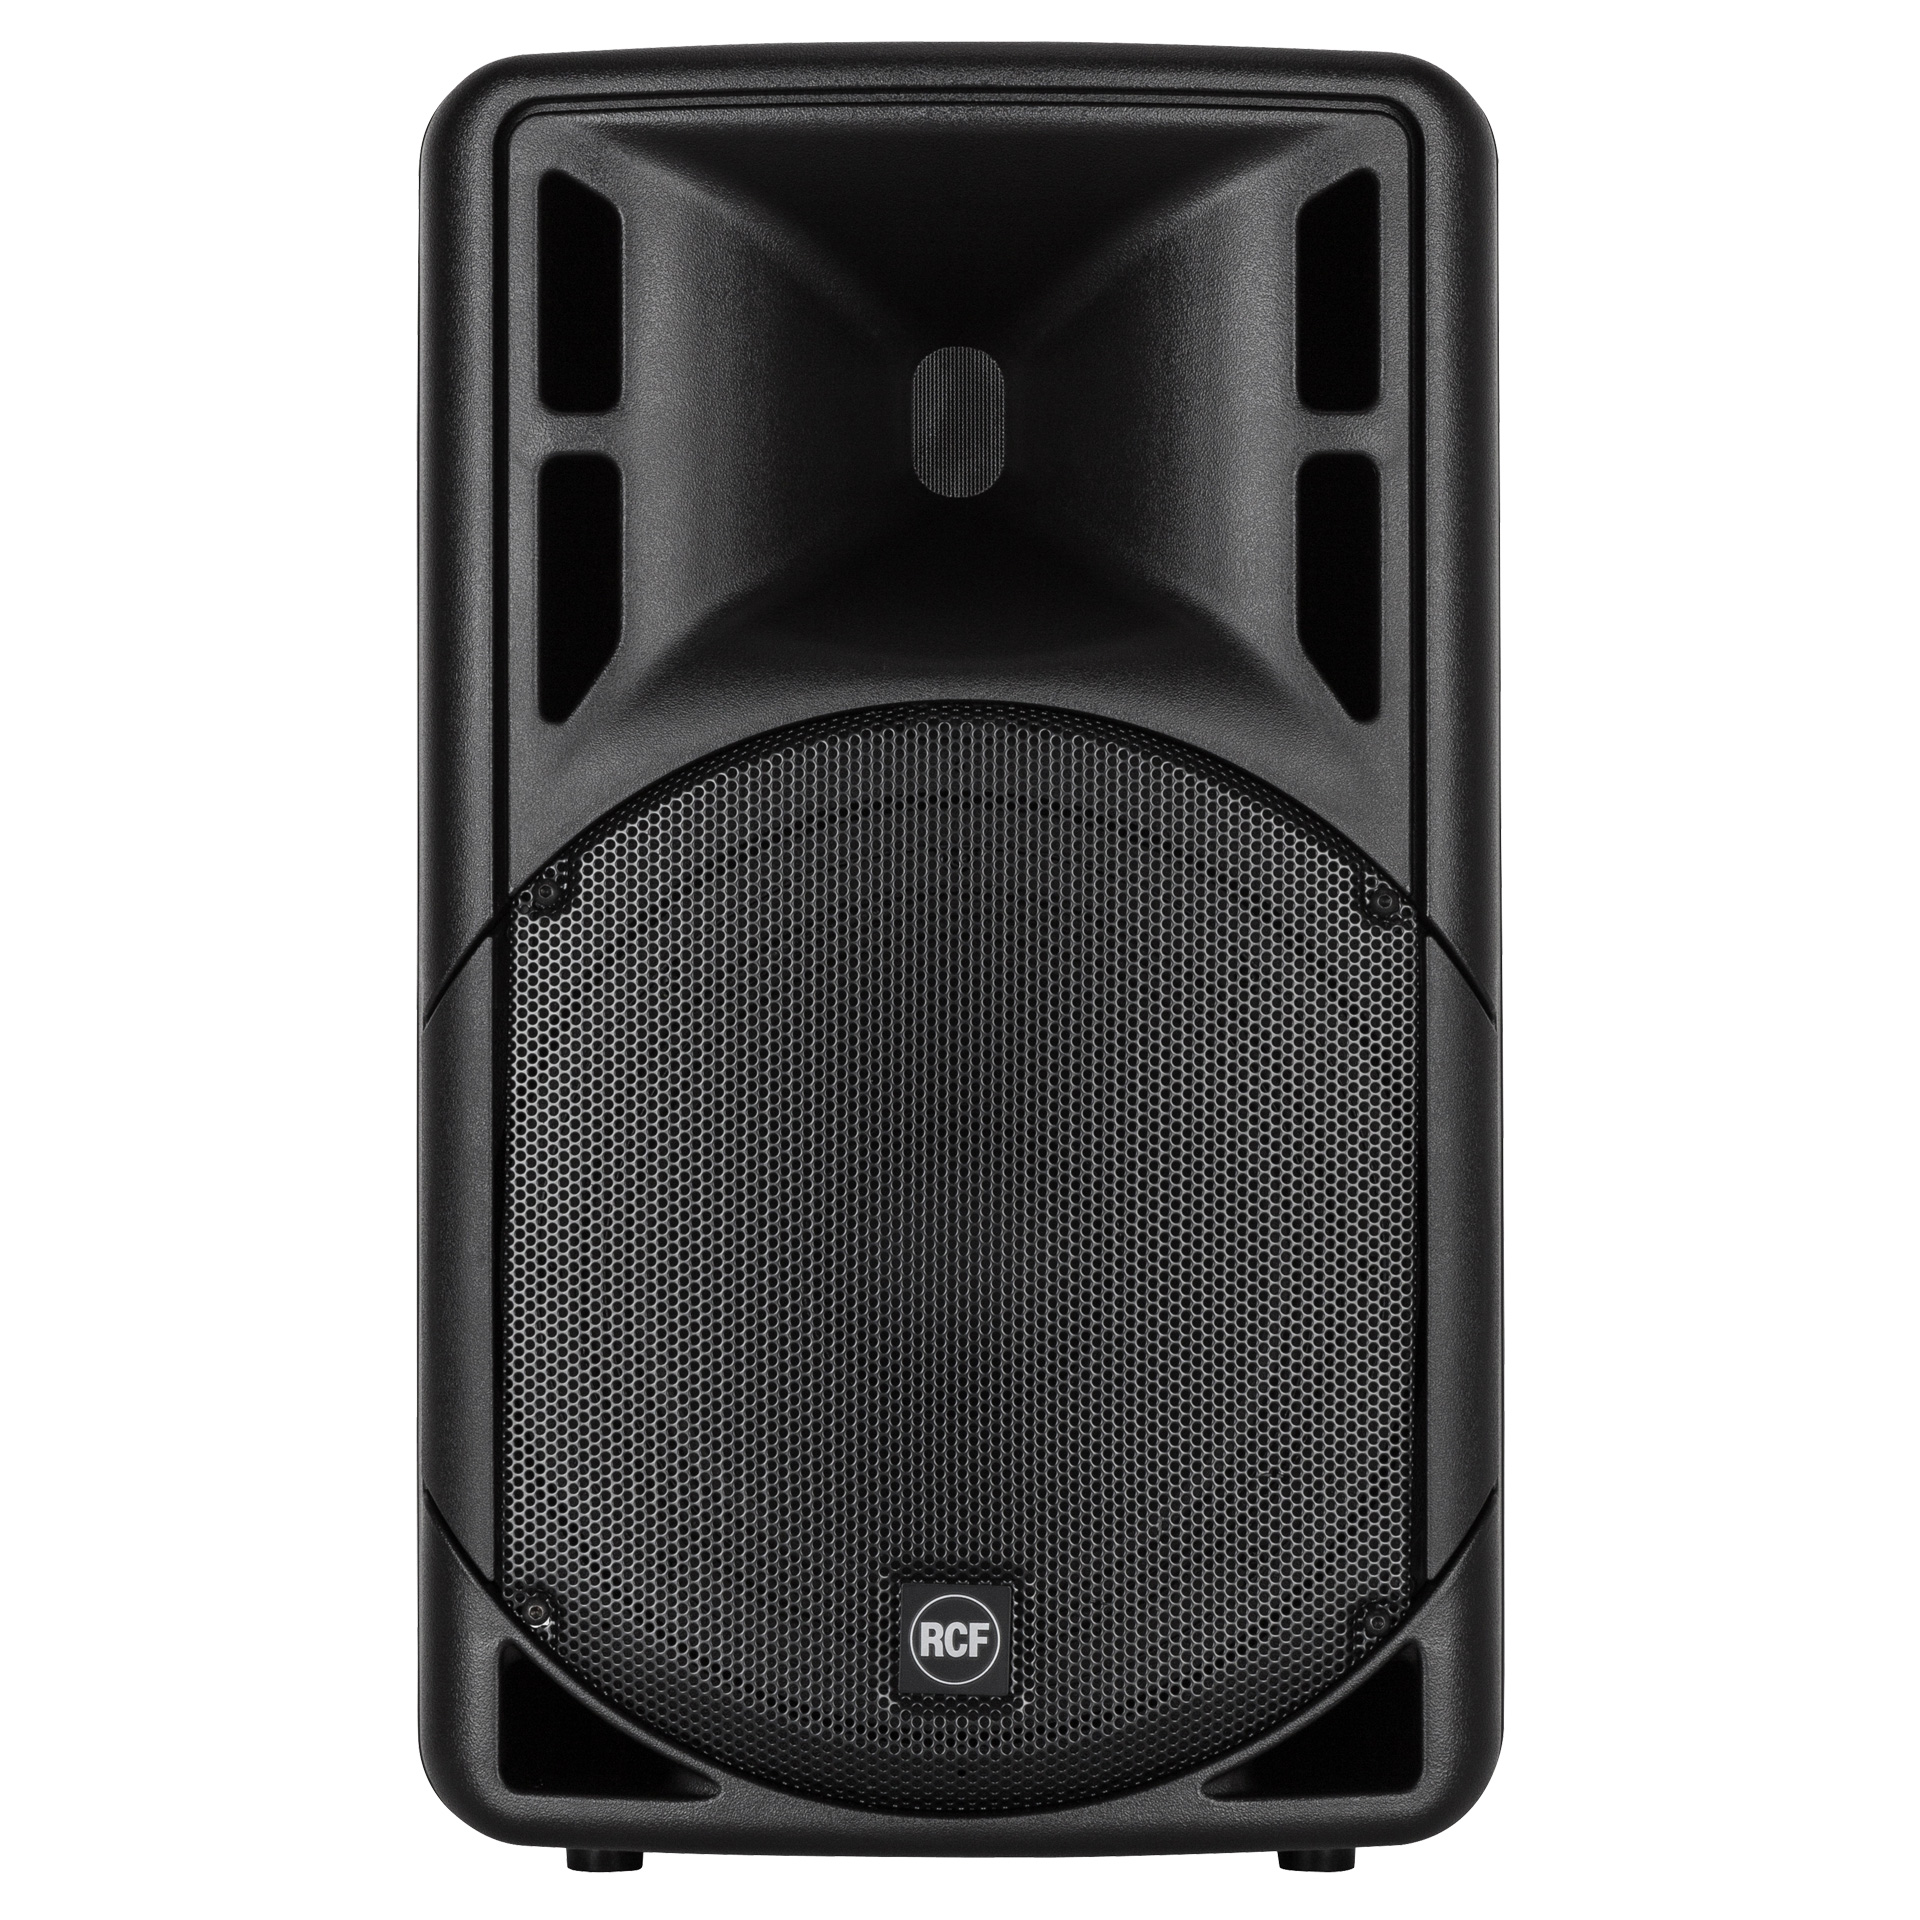 rcf 400 watt speaker price